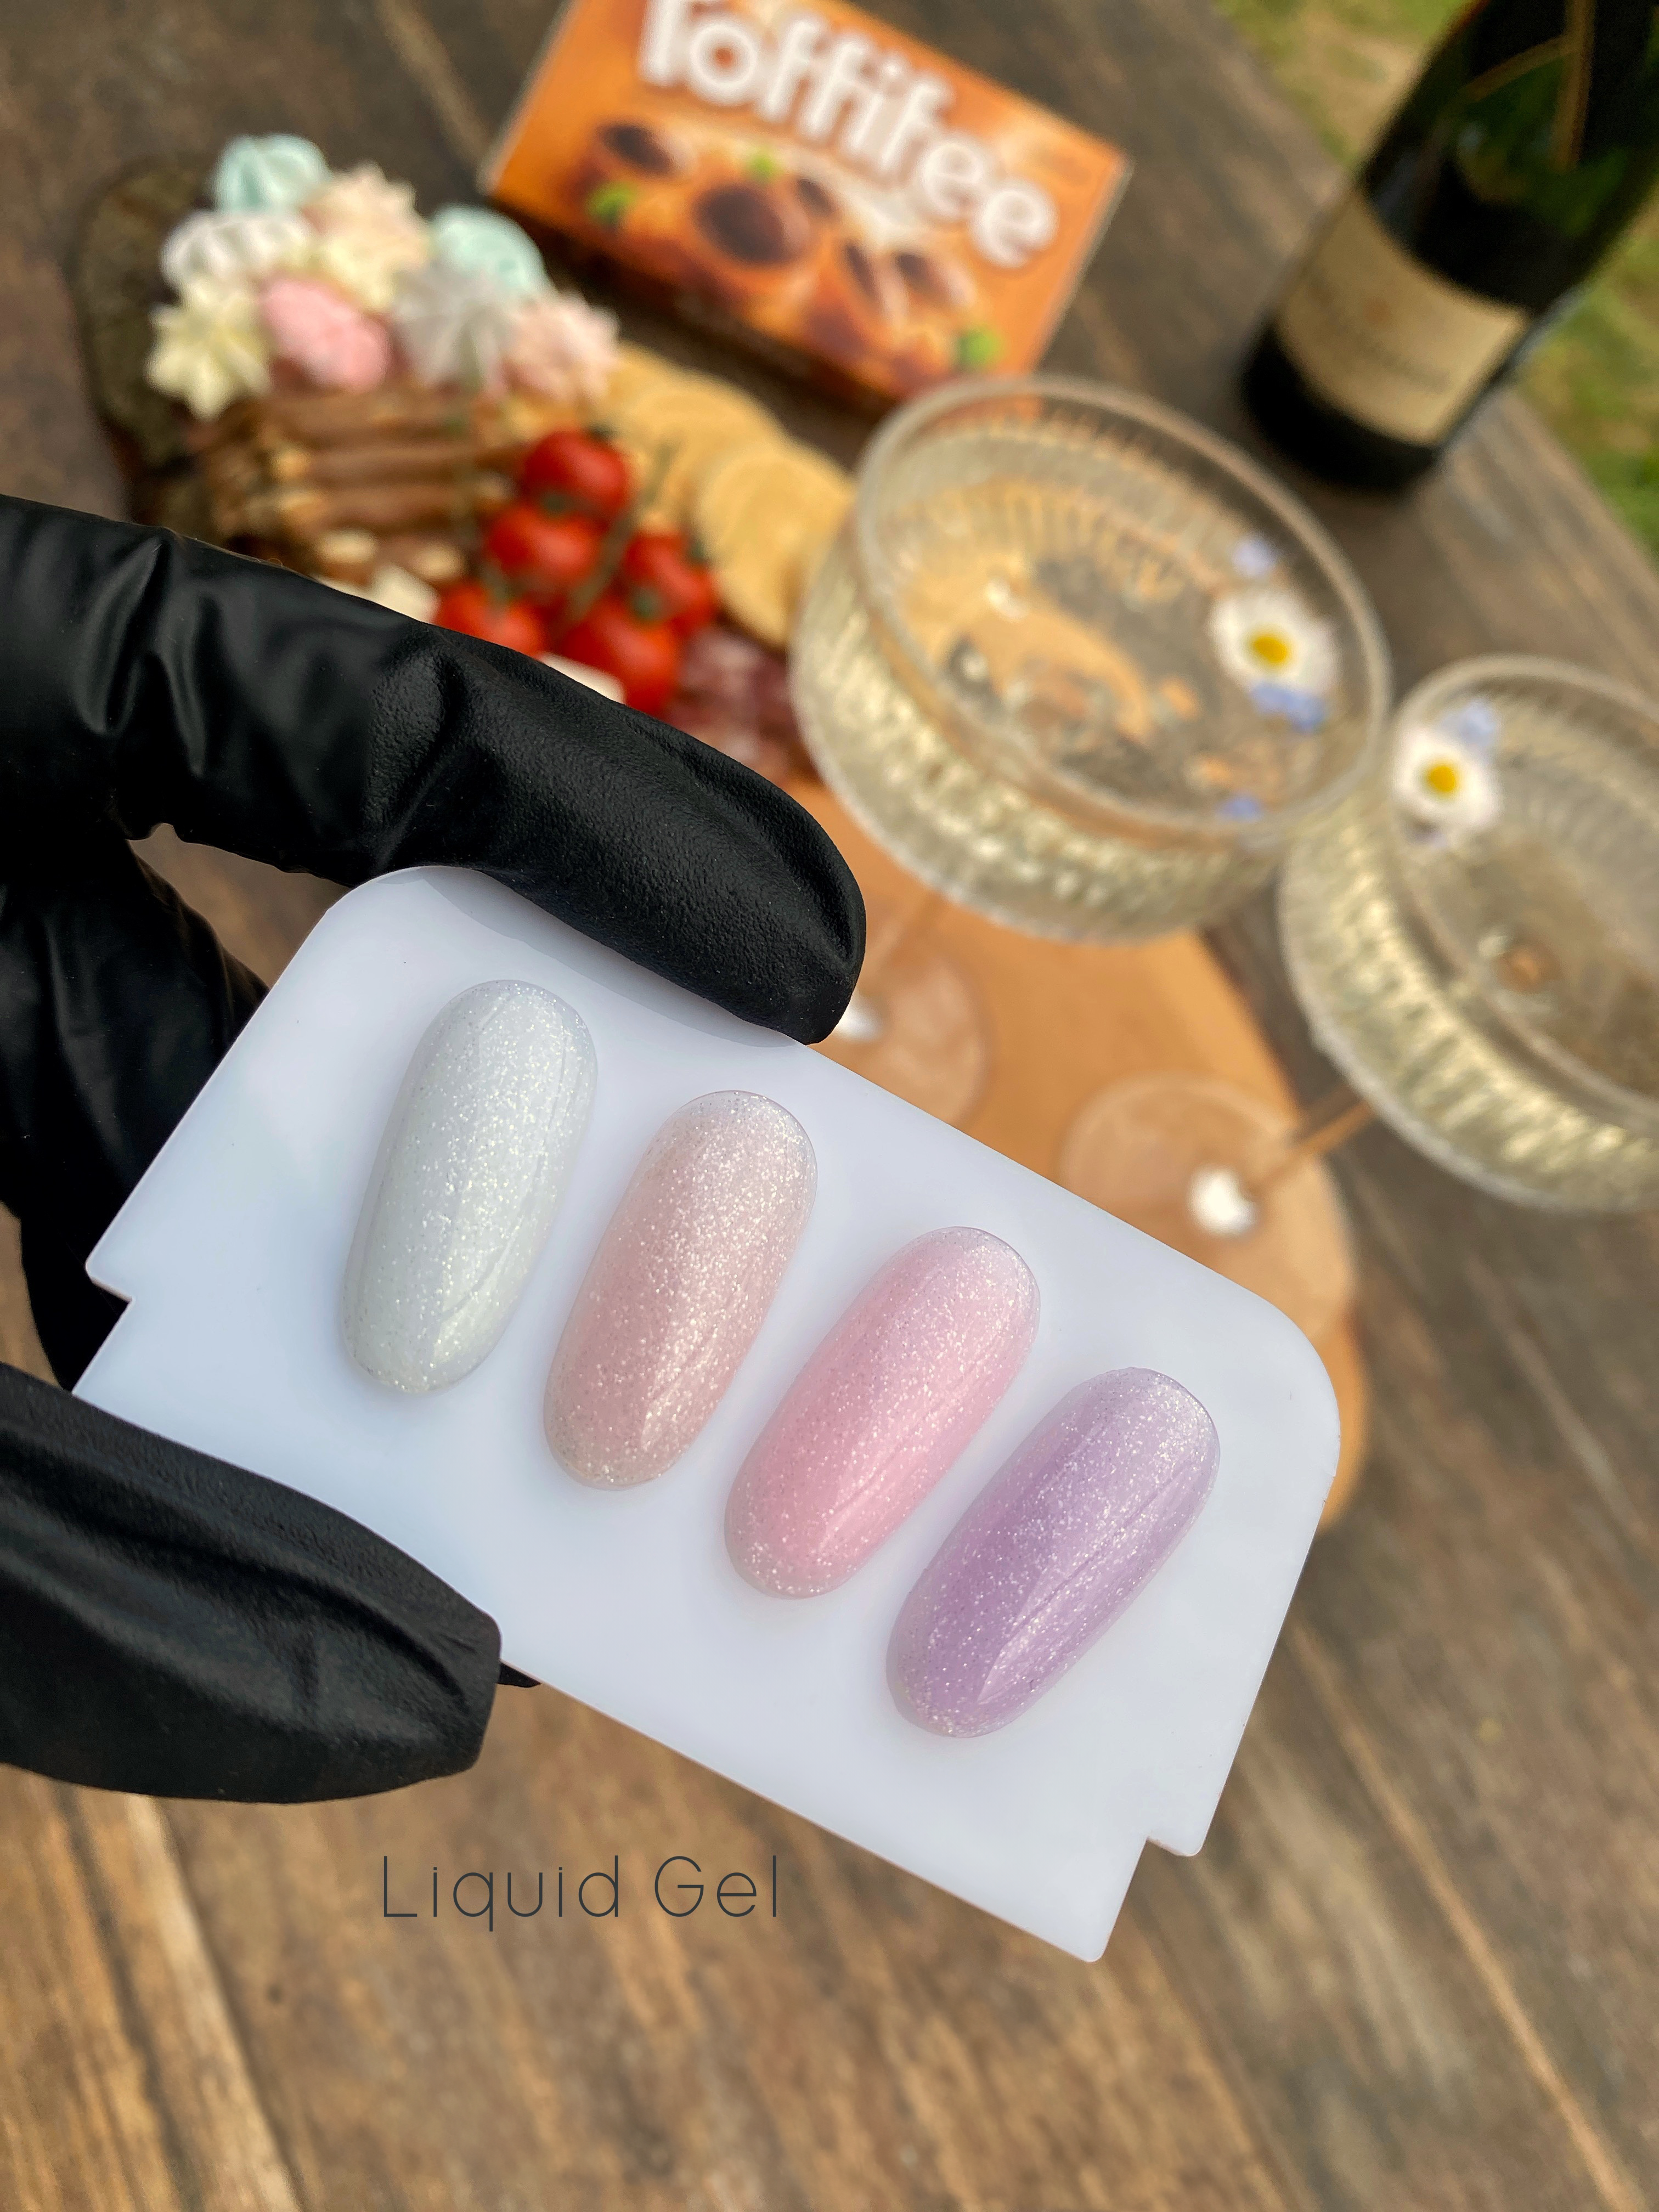 Liquid Gel Dom Pérignon (soon Lilac)